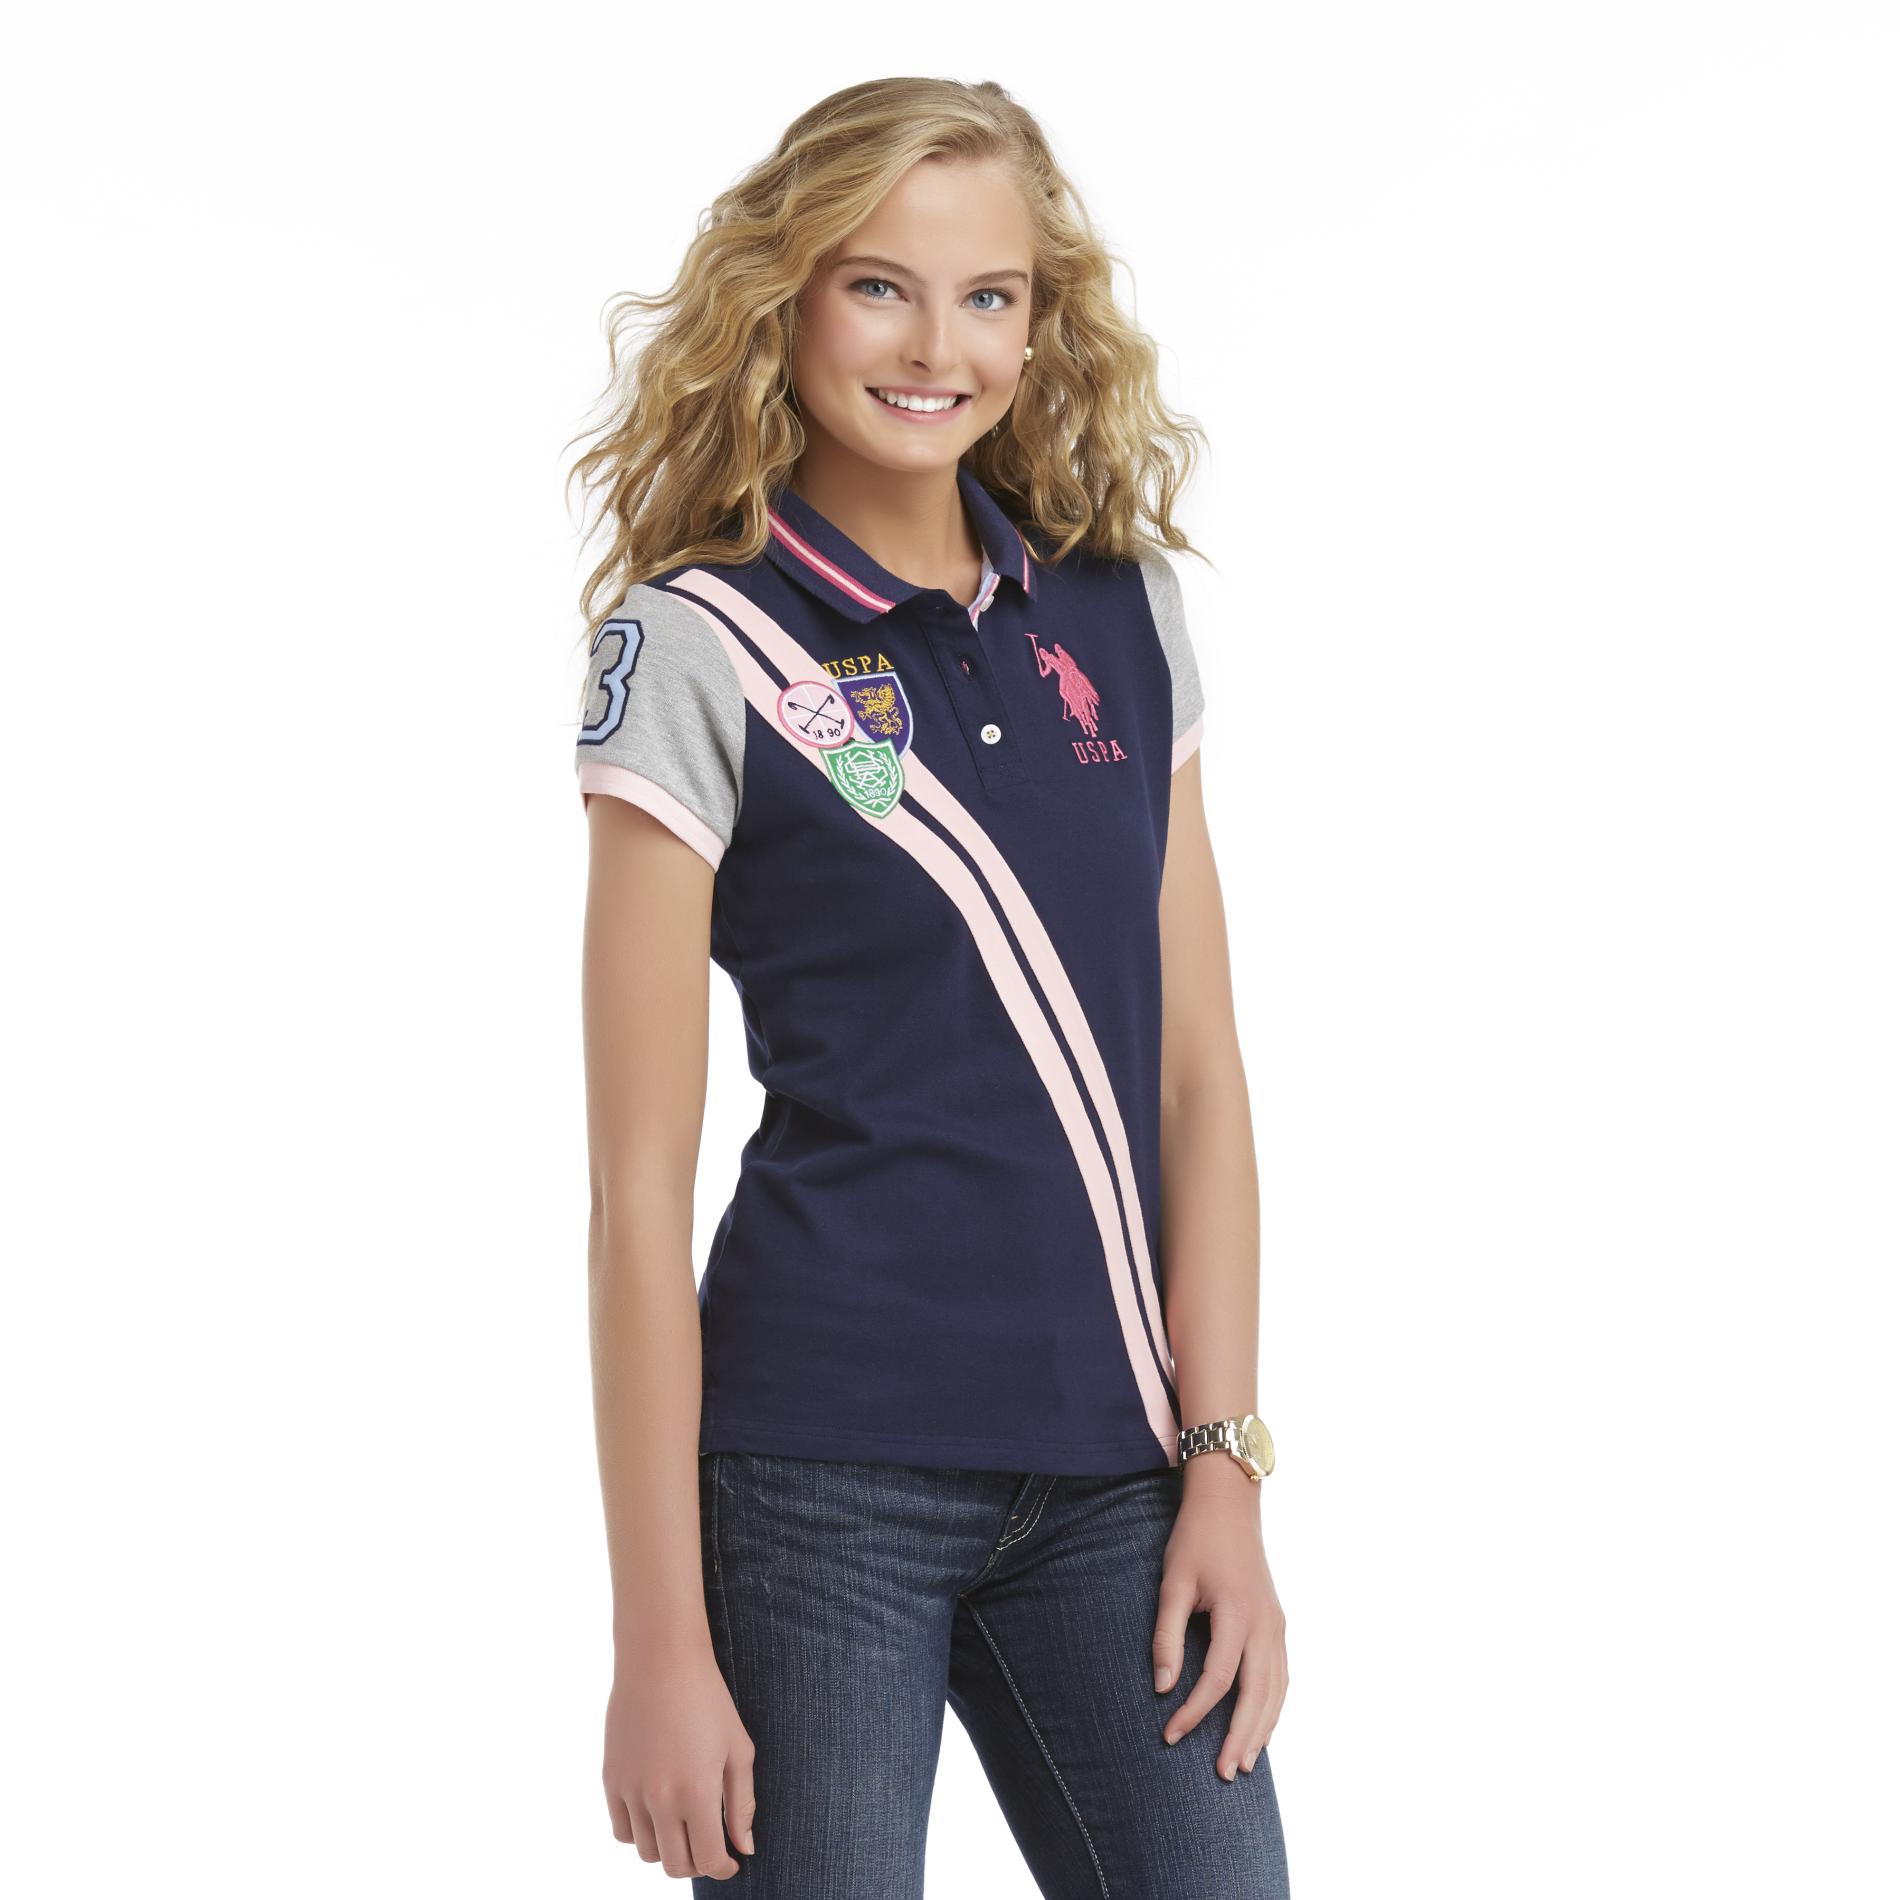 U.S. Polo Assn. Junior's Fashion Polo - Diagonal Stripes